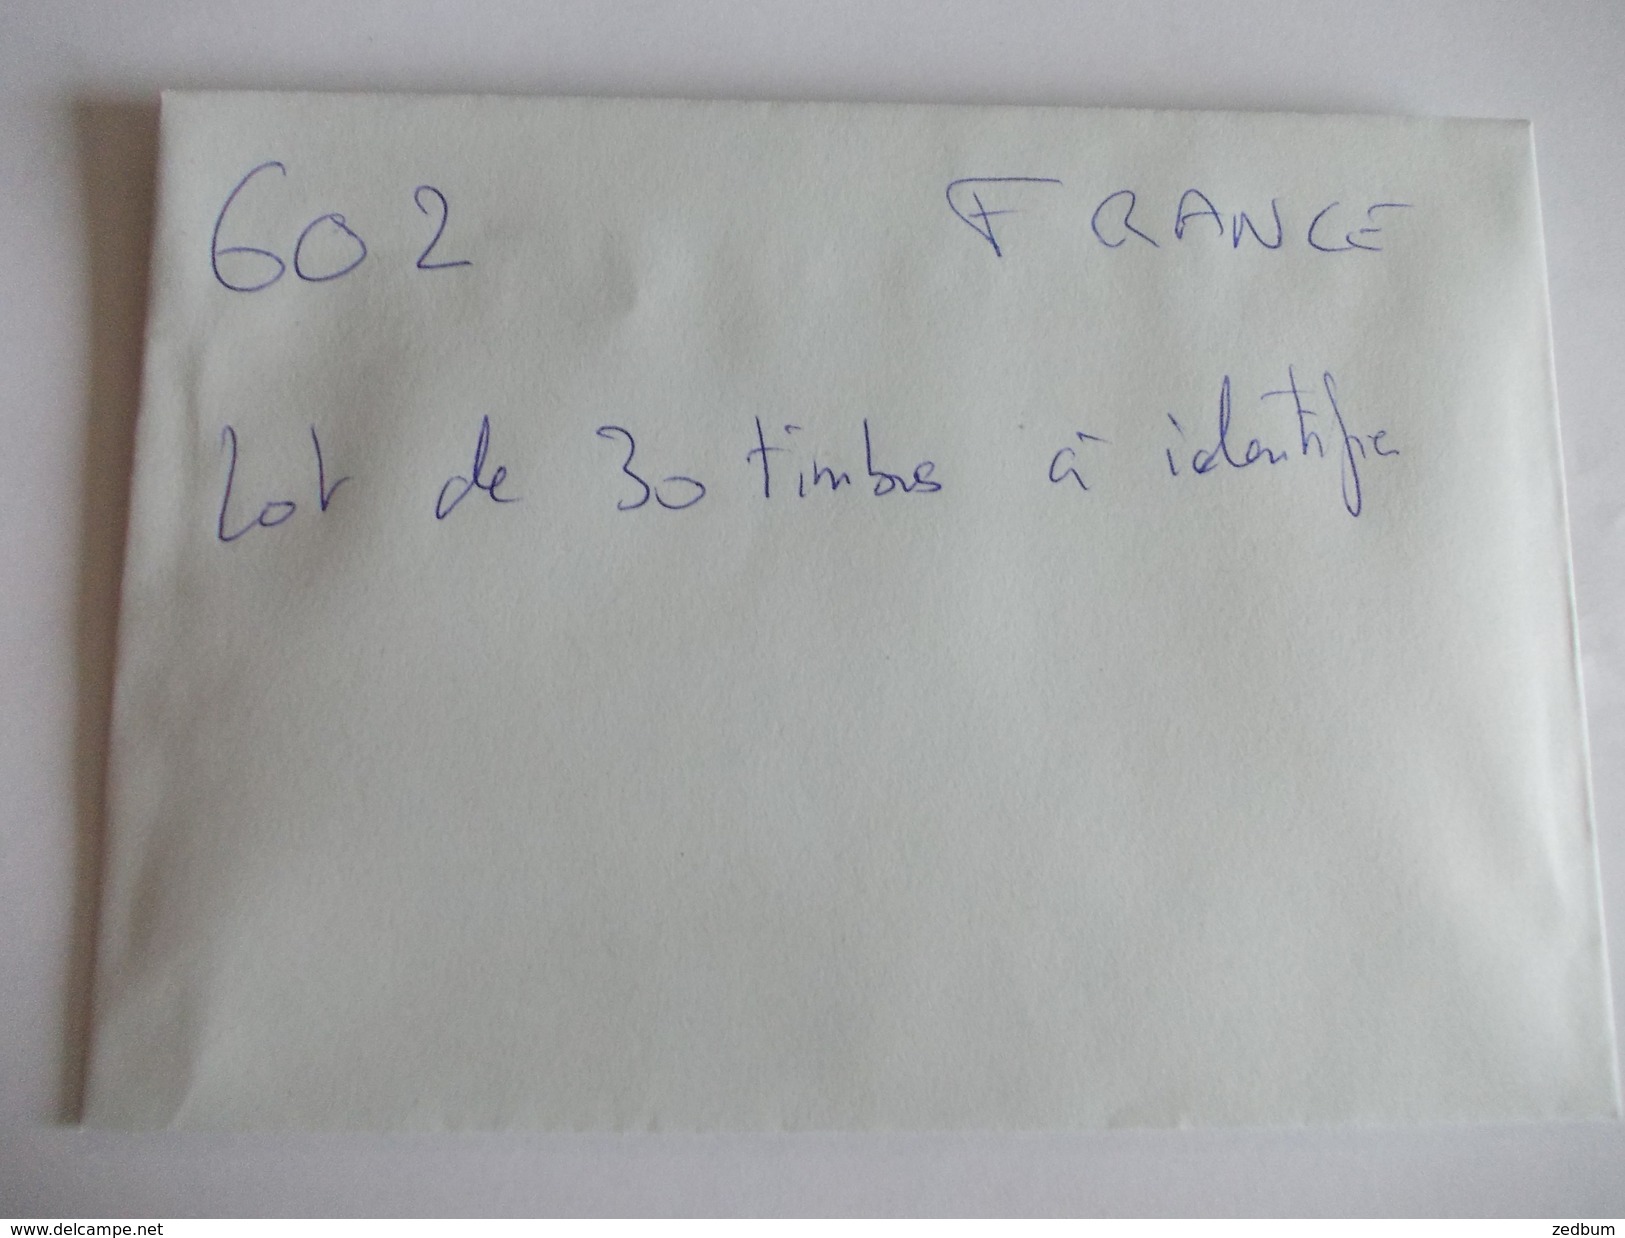 TIMBRE France Lot De 30 Timbres à Identifier N° 602 - Lots & Kiloware (mixtures) - Max. 999 Stamps